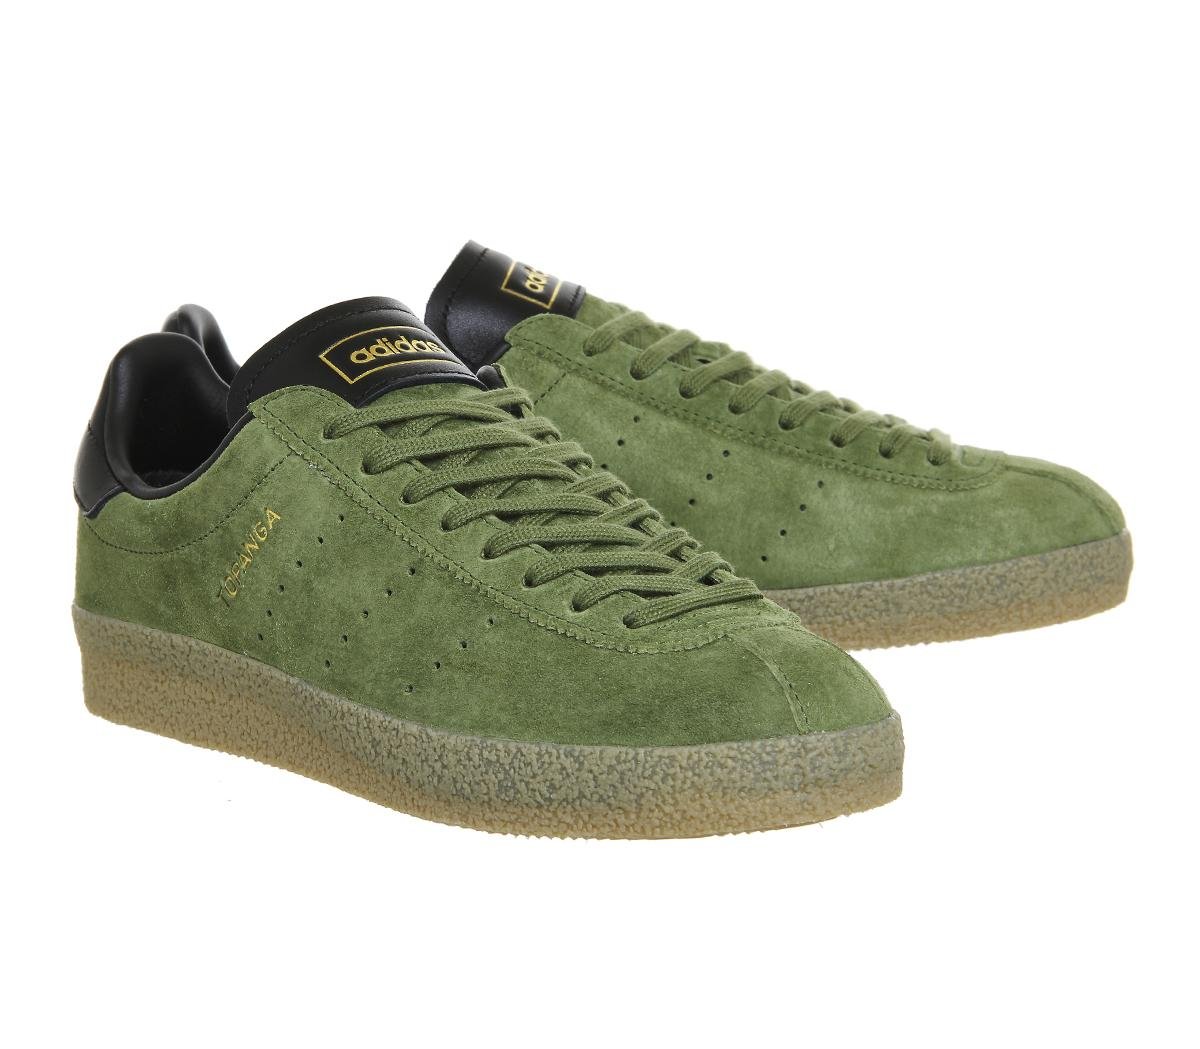 adidas topanga clean green